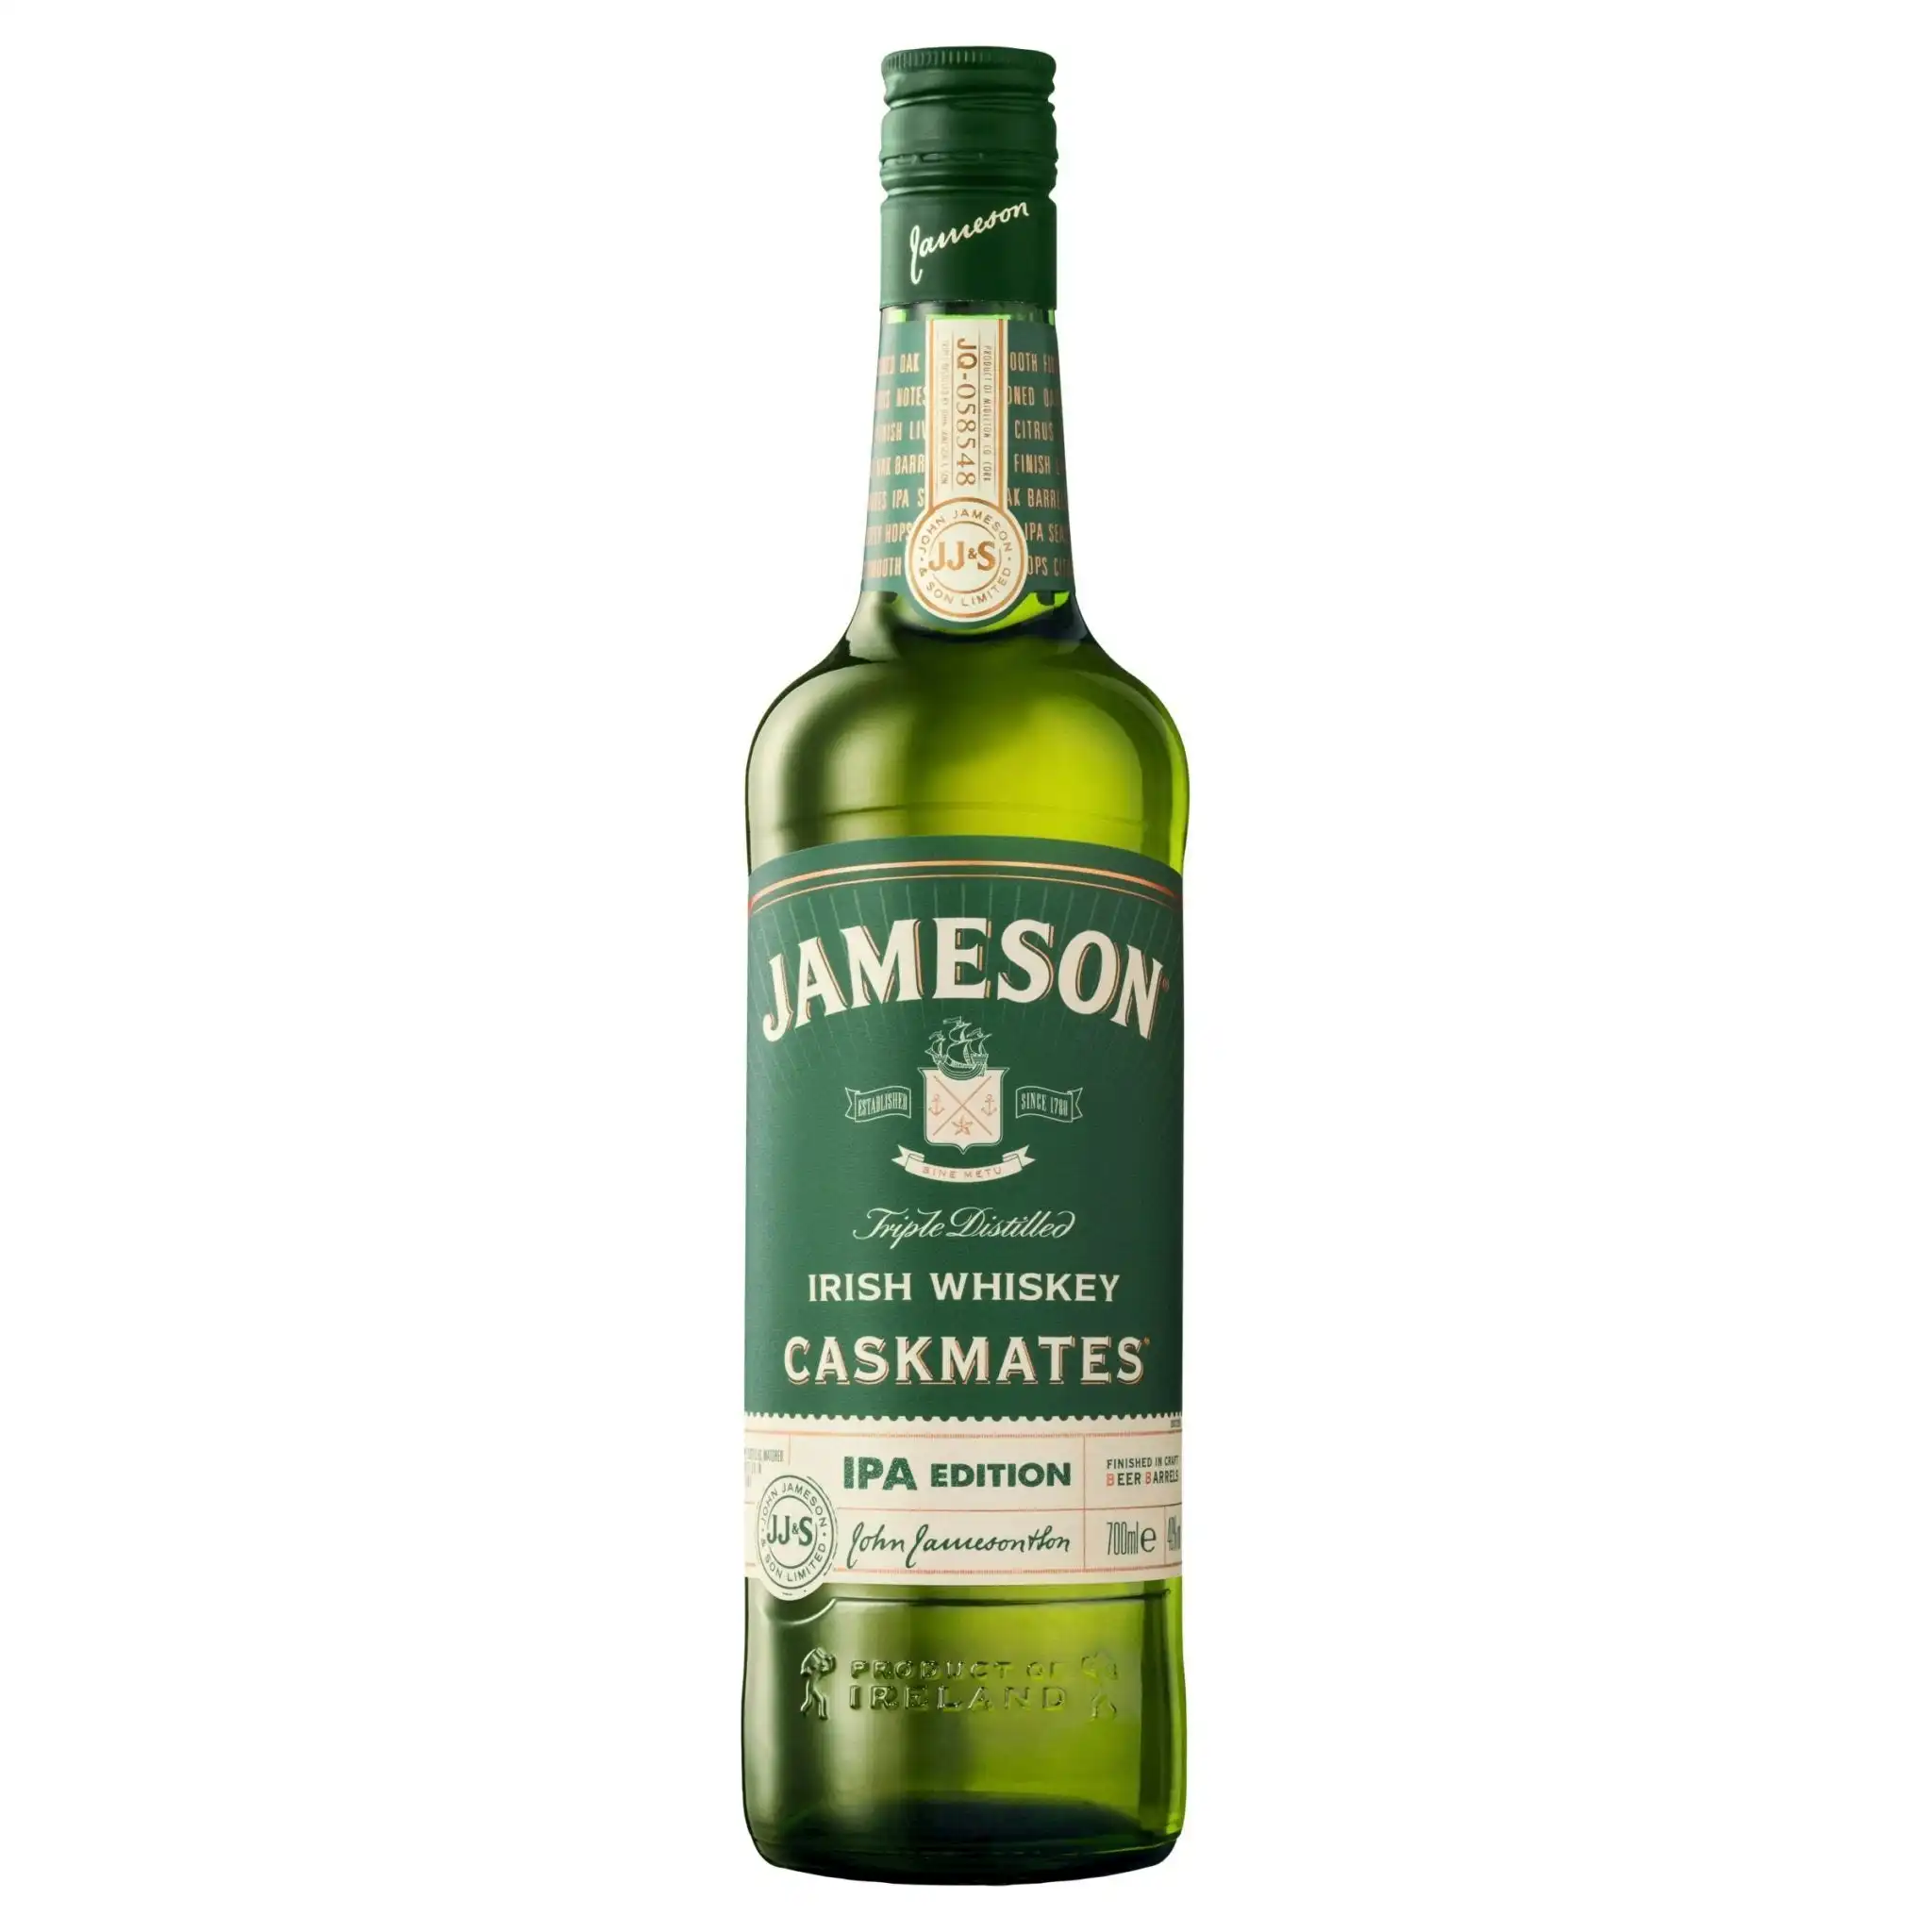 Jameson Caskmates IPA Edition Irish Whiskey (700mL)